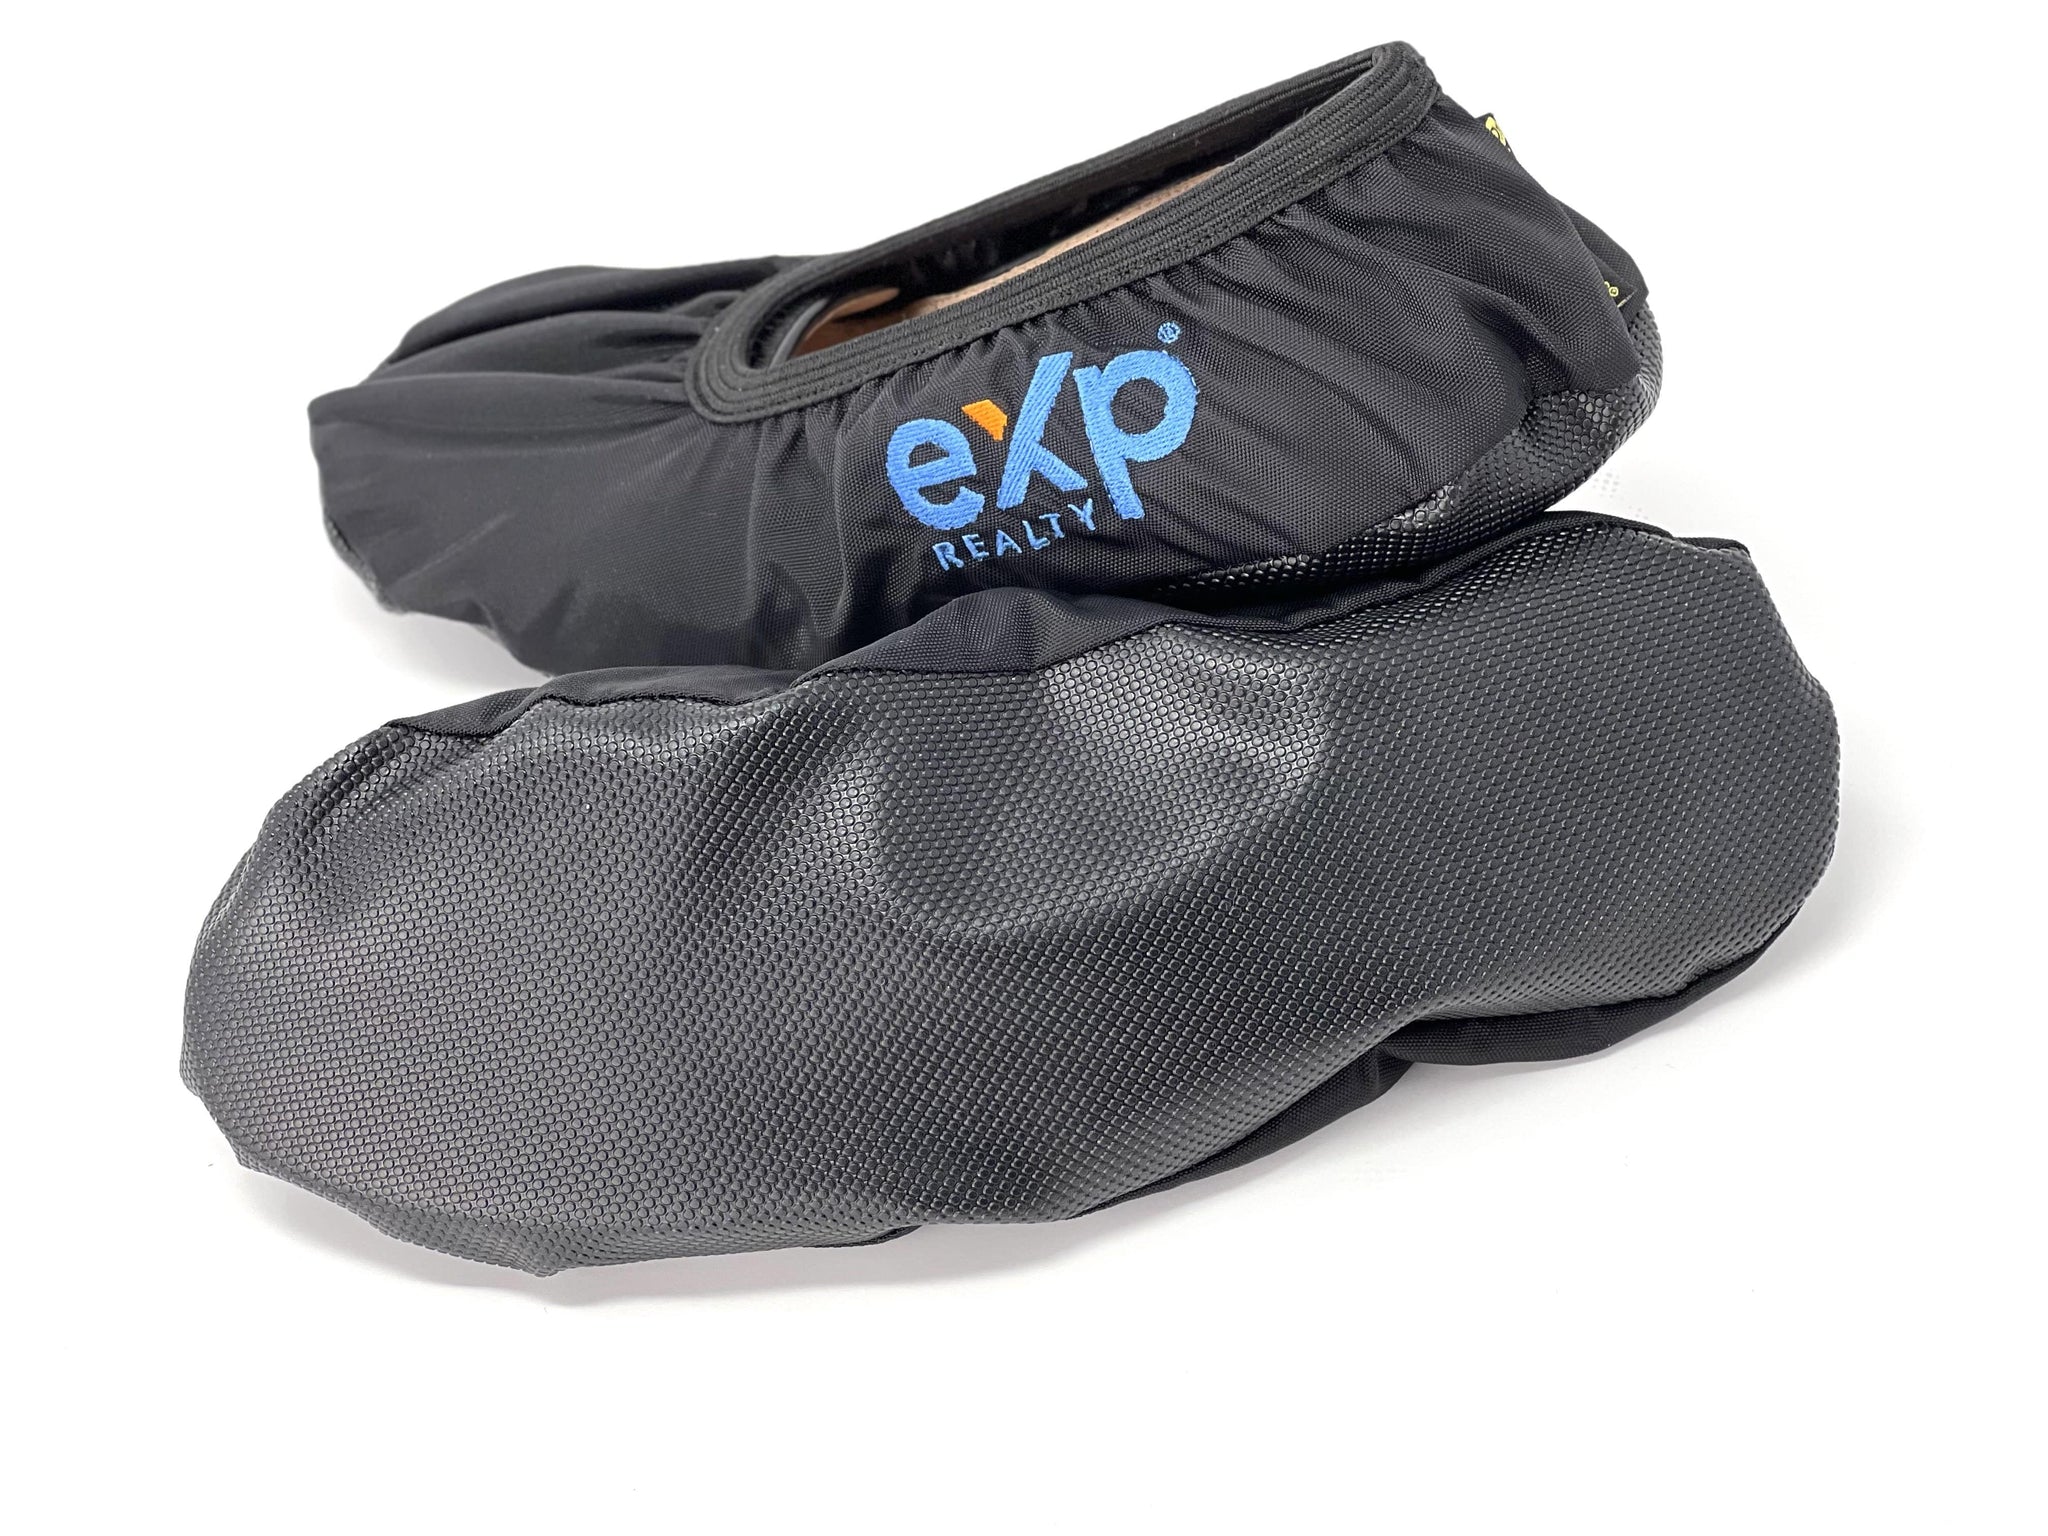  MyShoeCovers Premium Bowling Shoe Covers - 1 Pair